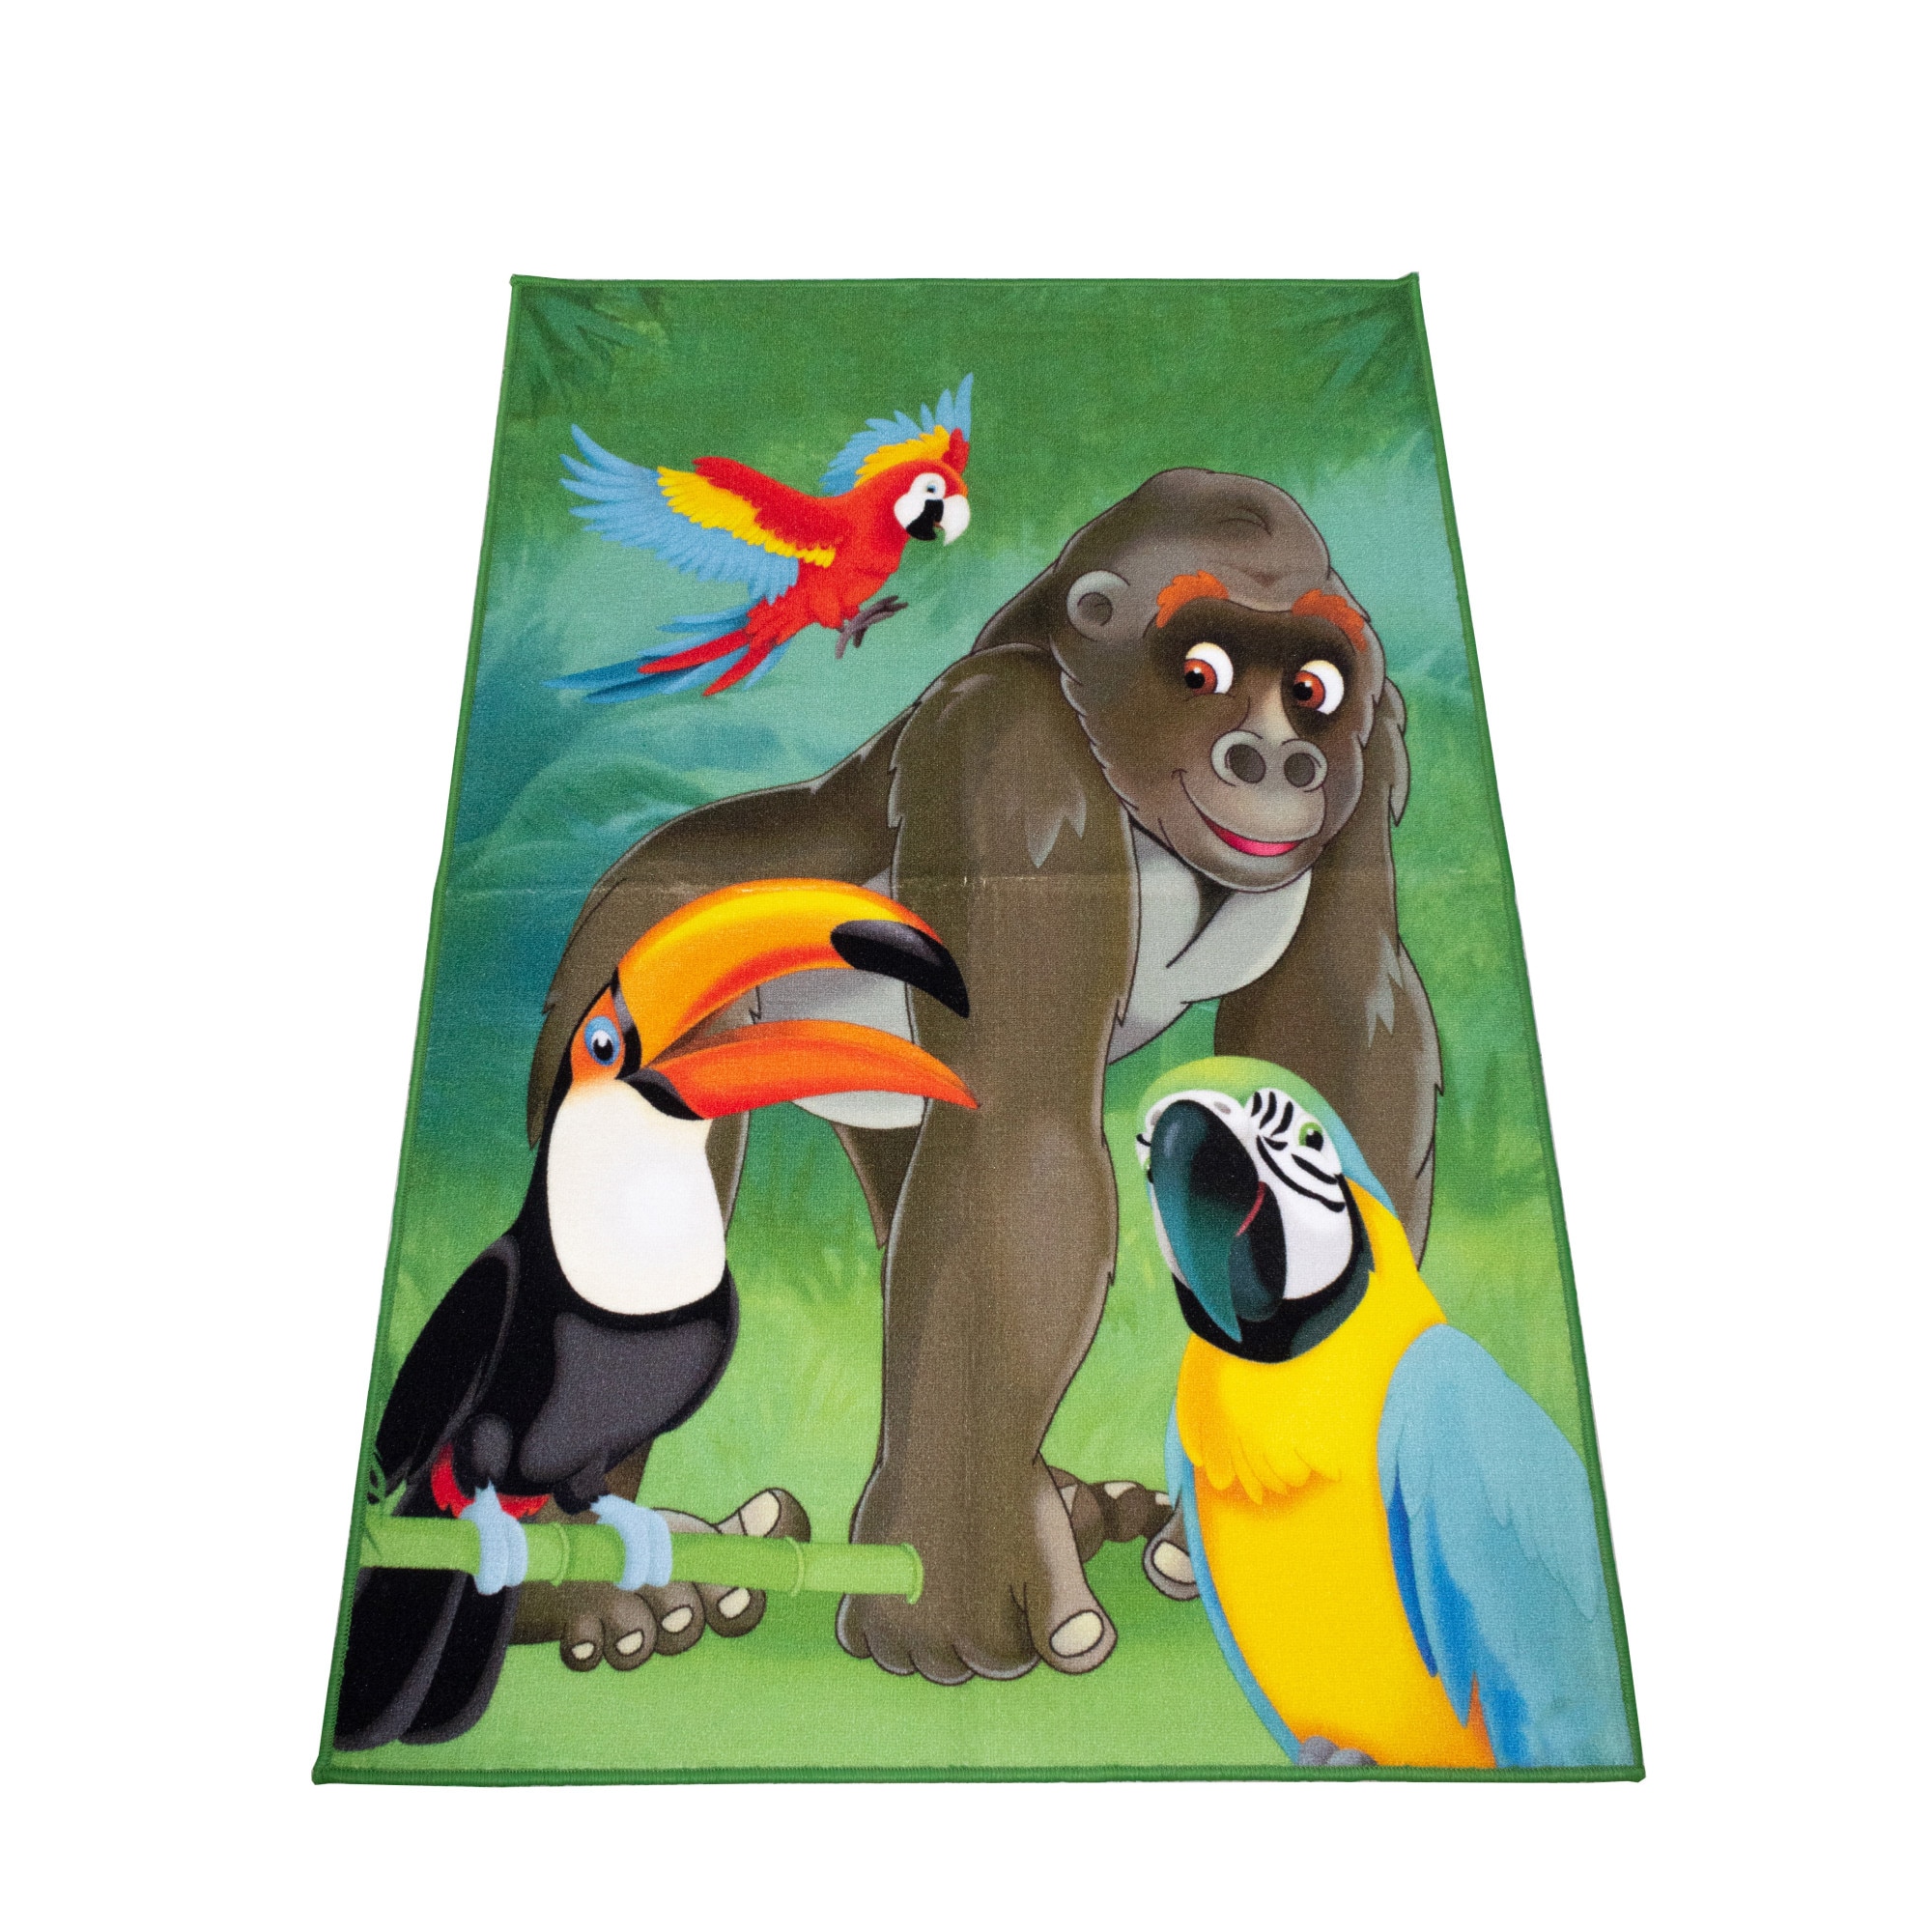 Covor copii Brill Gorilla, 130x190 cm, grosime  mm, tip printed,  poliester, lavabil, aspect lucios, antiderapant, 1000g, model gorila -  